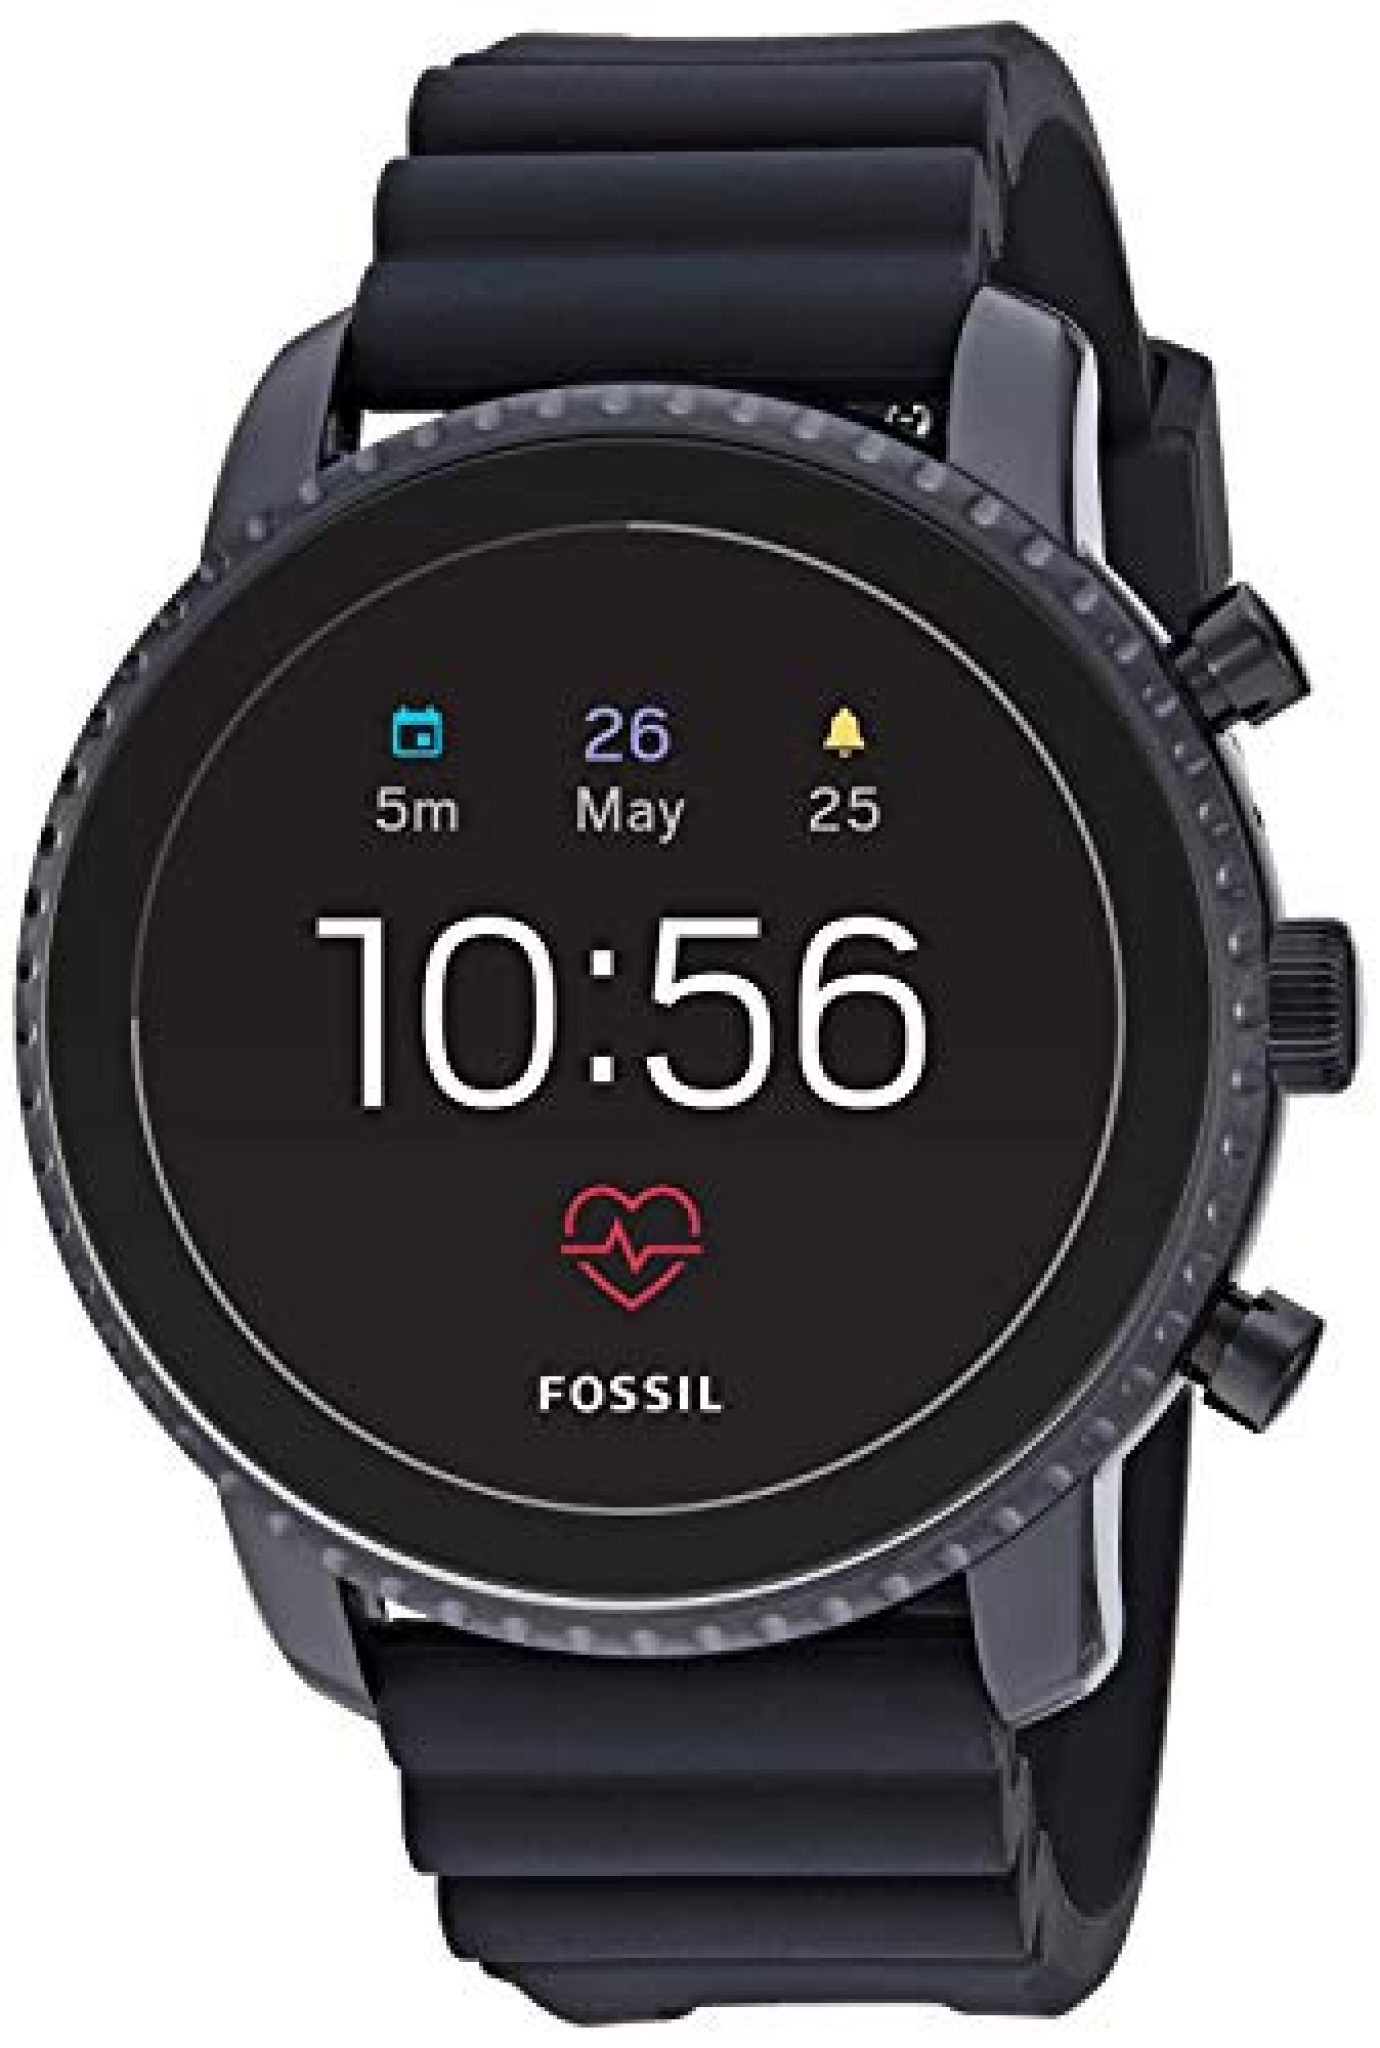 Fossil Men's Gen 4 Explorist HR Stainless Steel Touchscreen Smartwatch